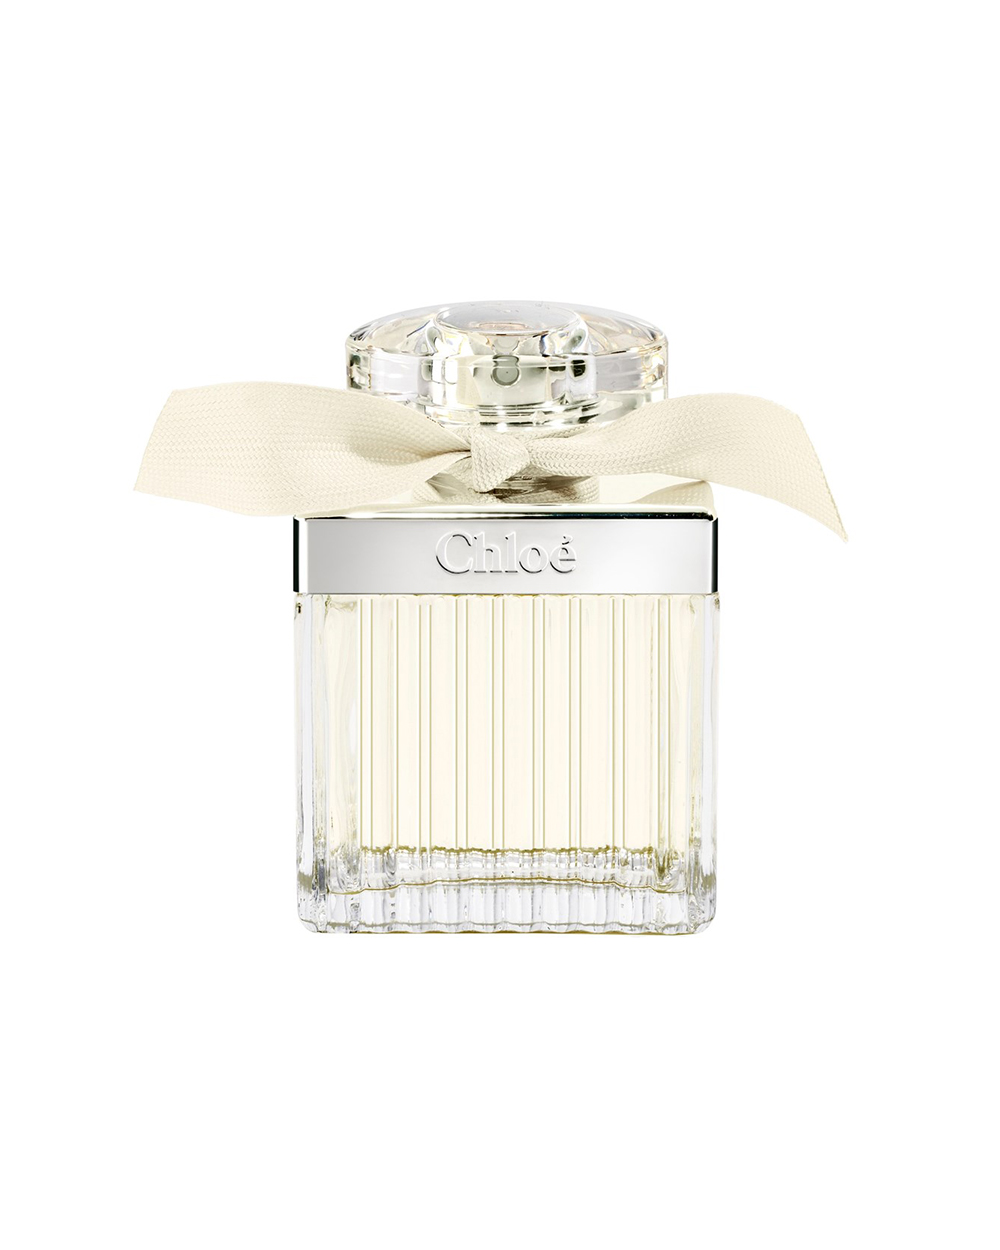 Chloe Eau De Parfum, $113, from Smith & Caughey's